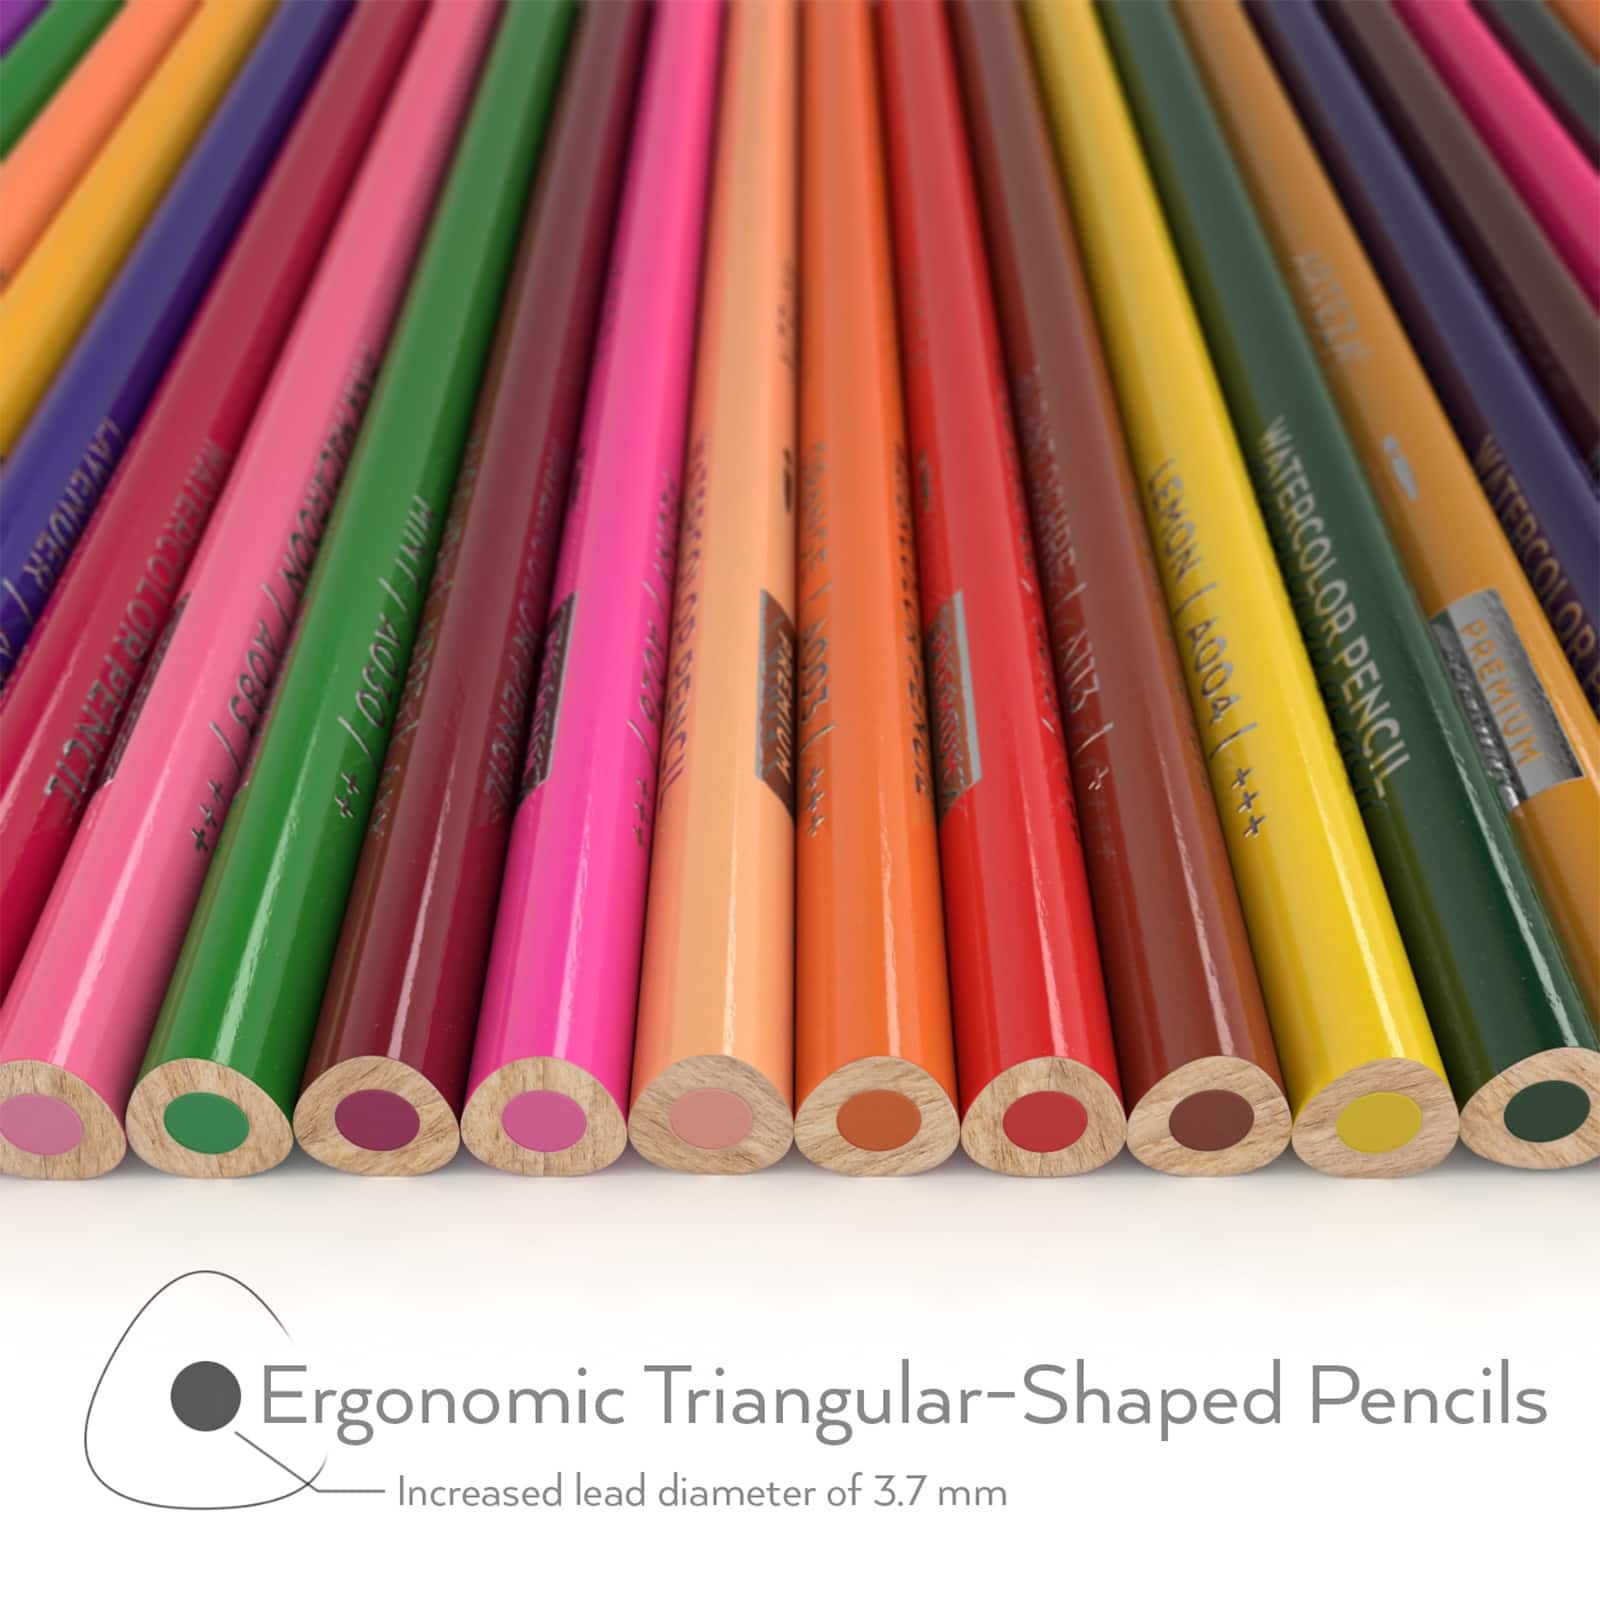 Arteza&#xAE; Premium Watercolor 48 Pencil Set